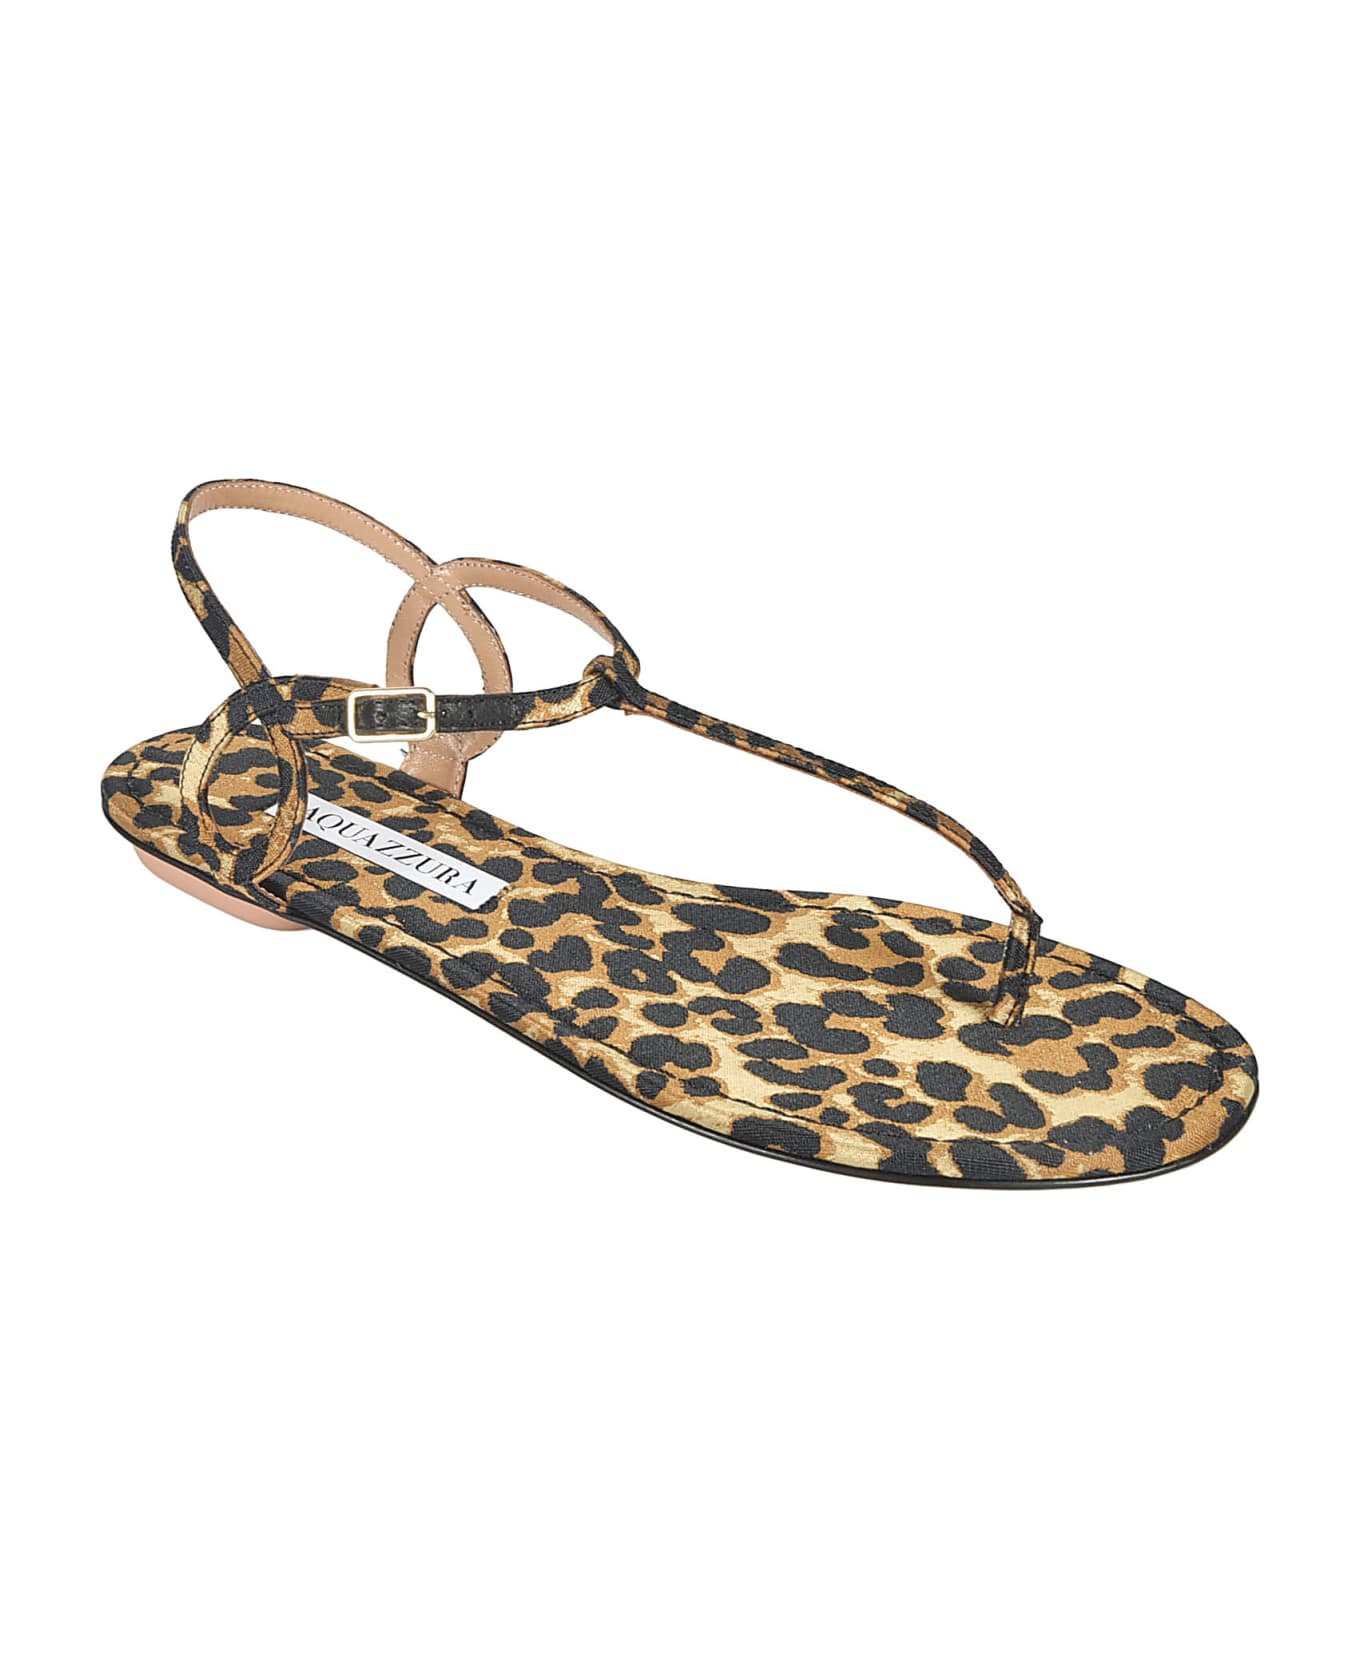 Aquazzura Leopard Bare Flat Sandals - Caramel サンダル